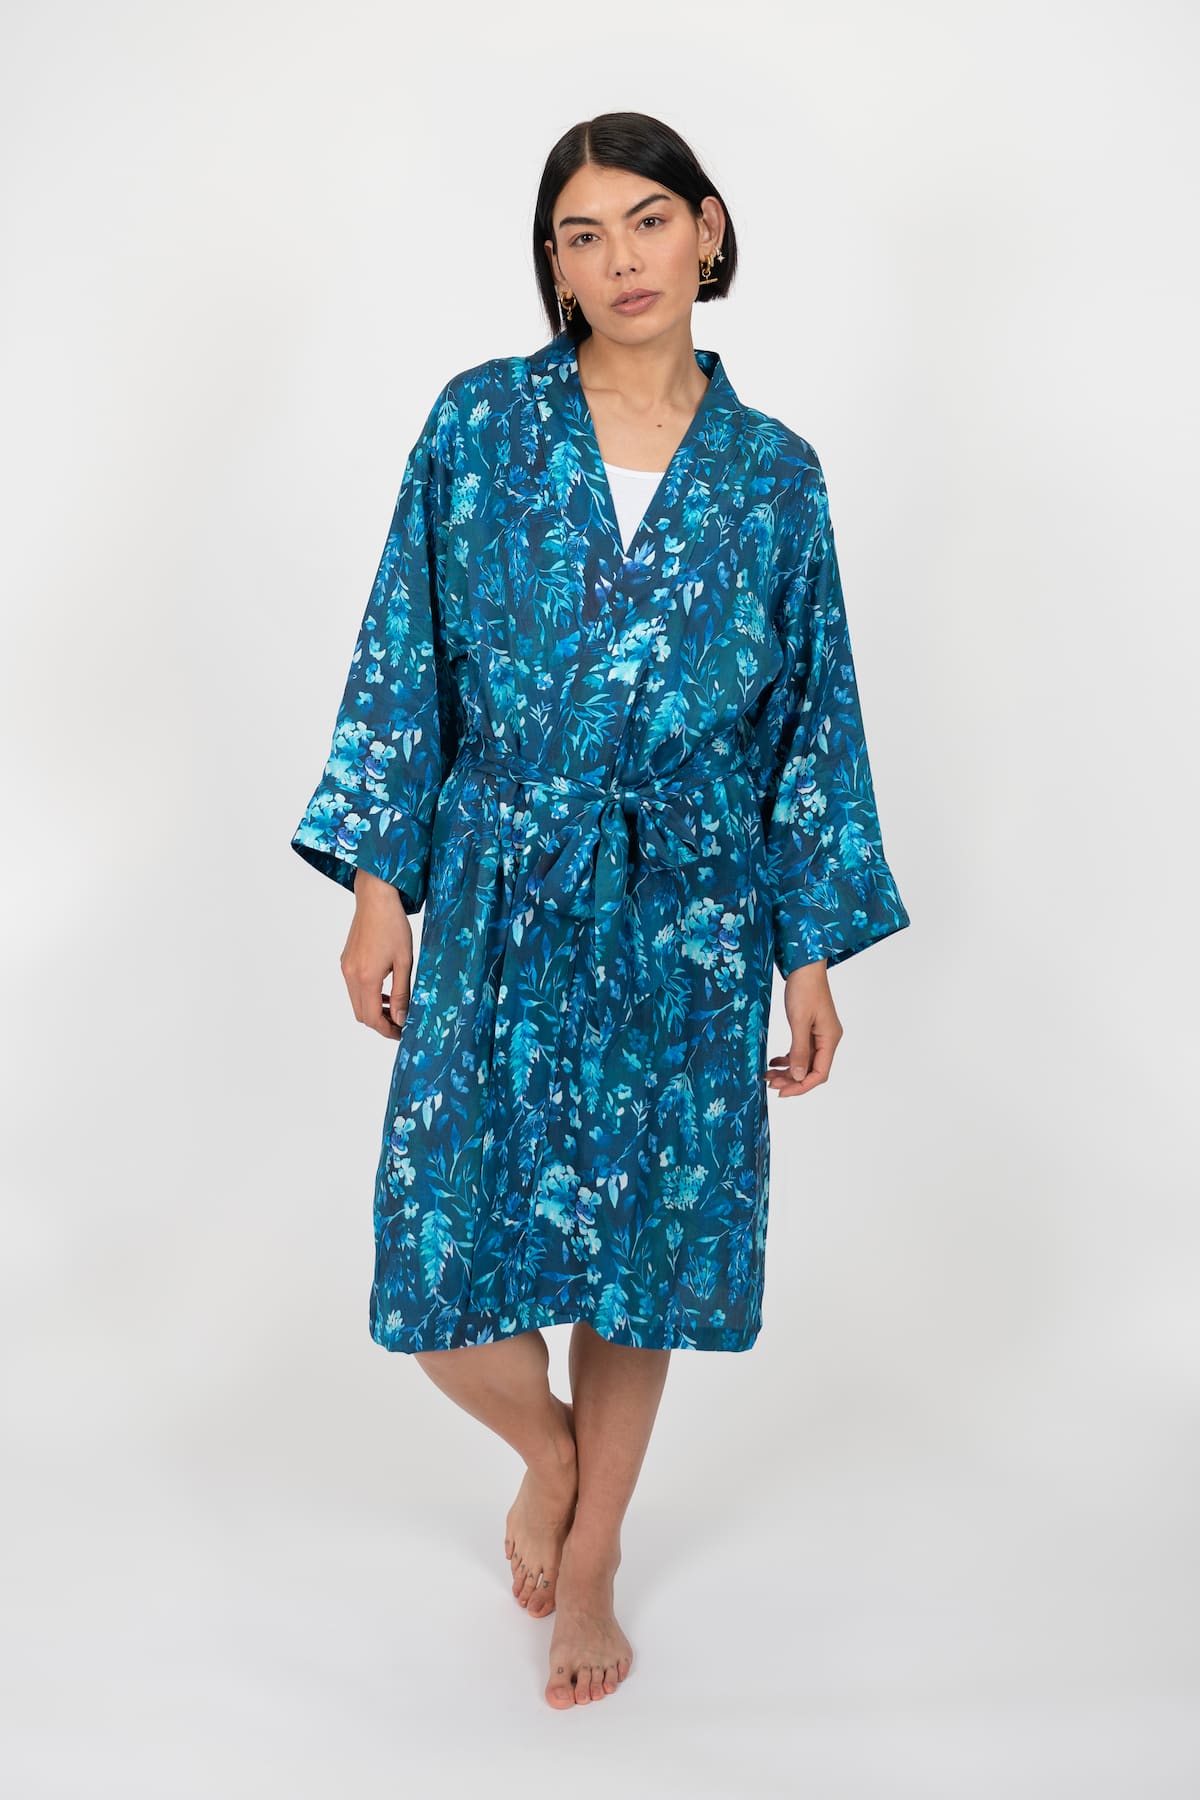 Cerulean Dream Kimono Robe - Front Main 1 - Luxury Kimono Robes - Orchard Moon